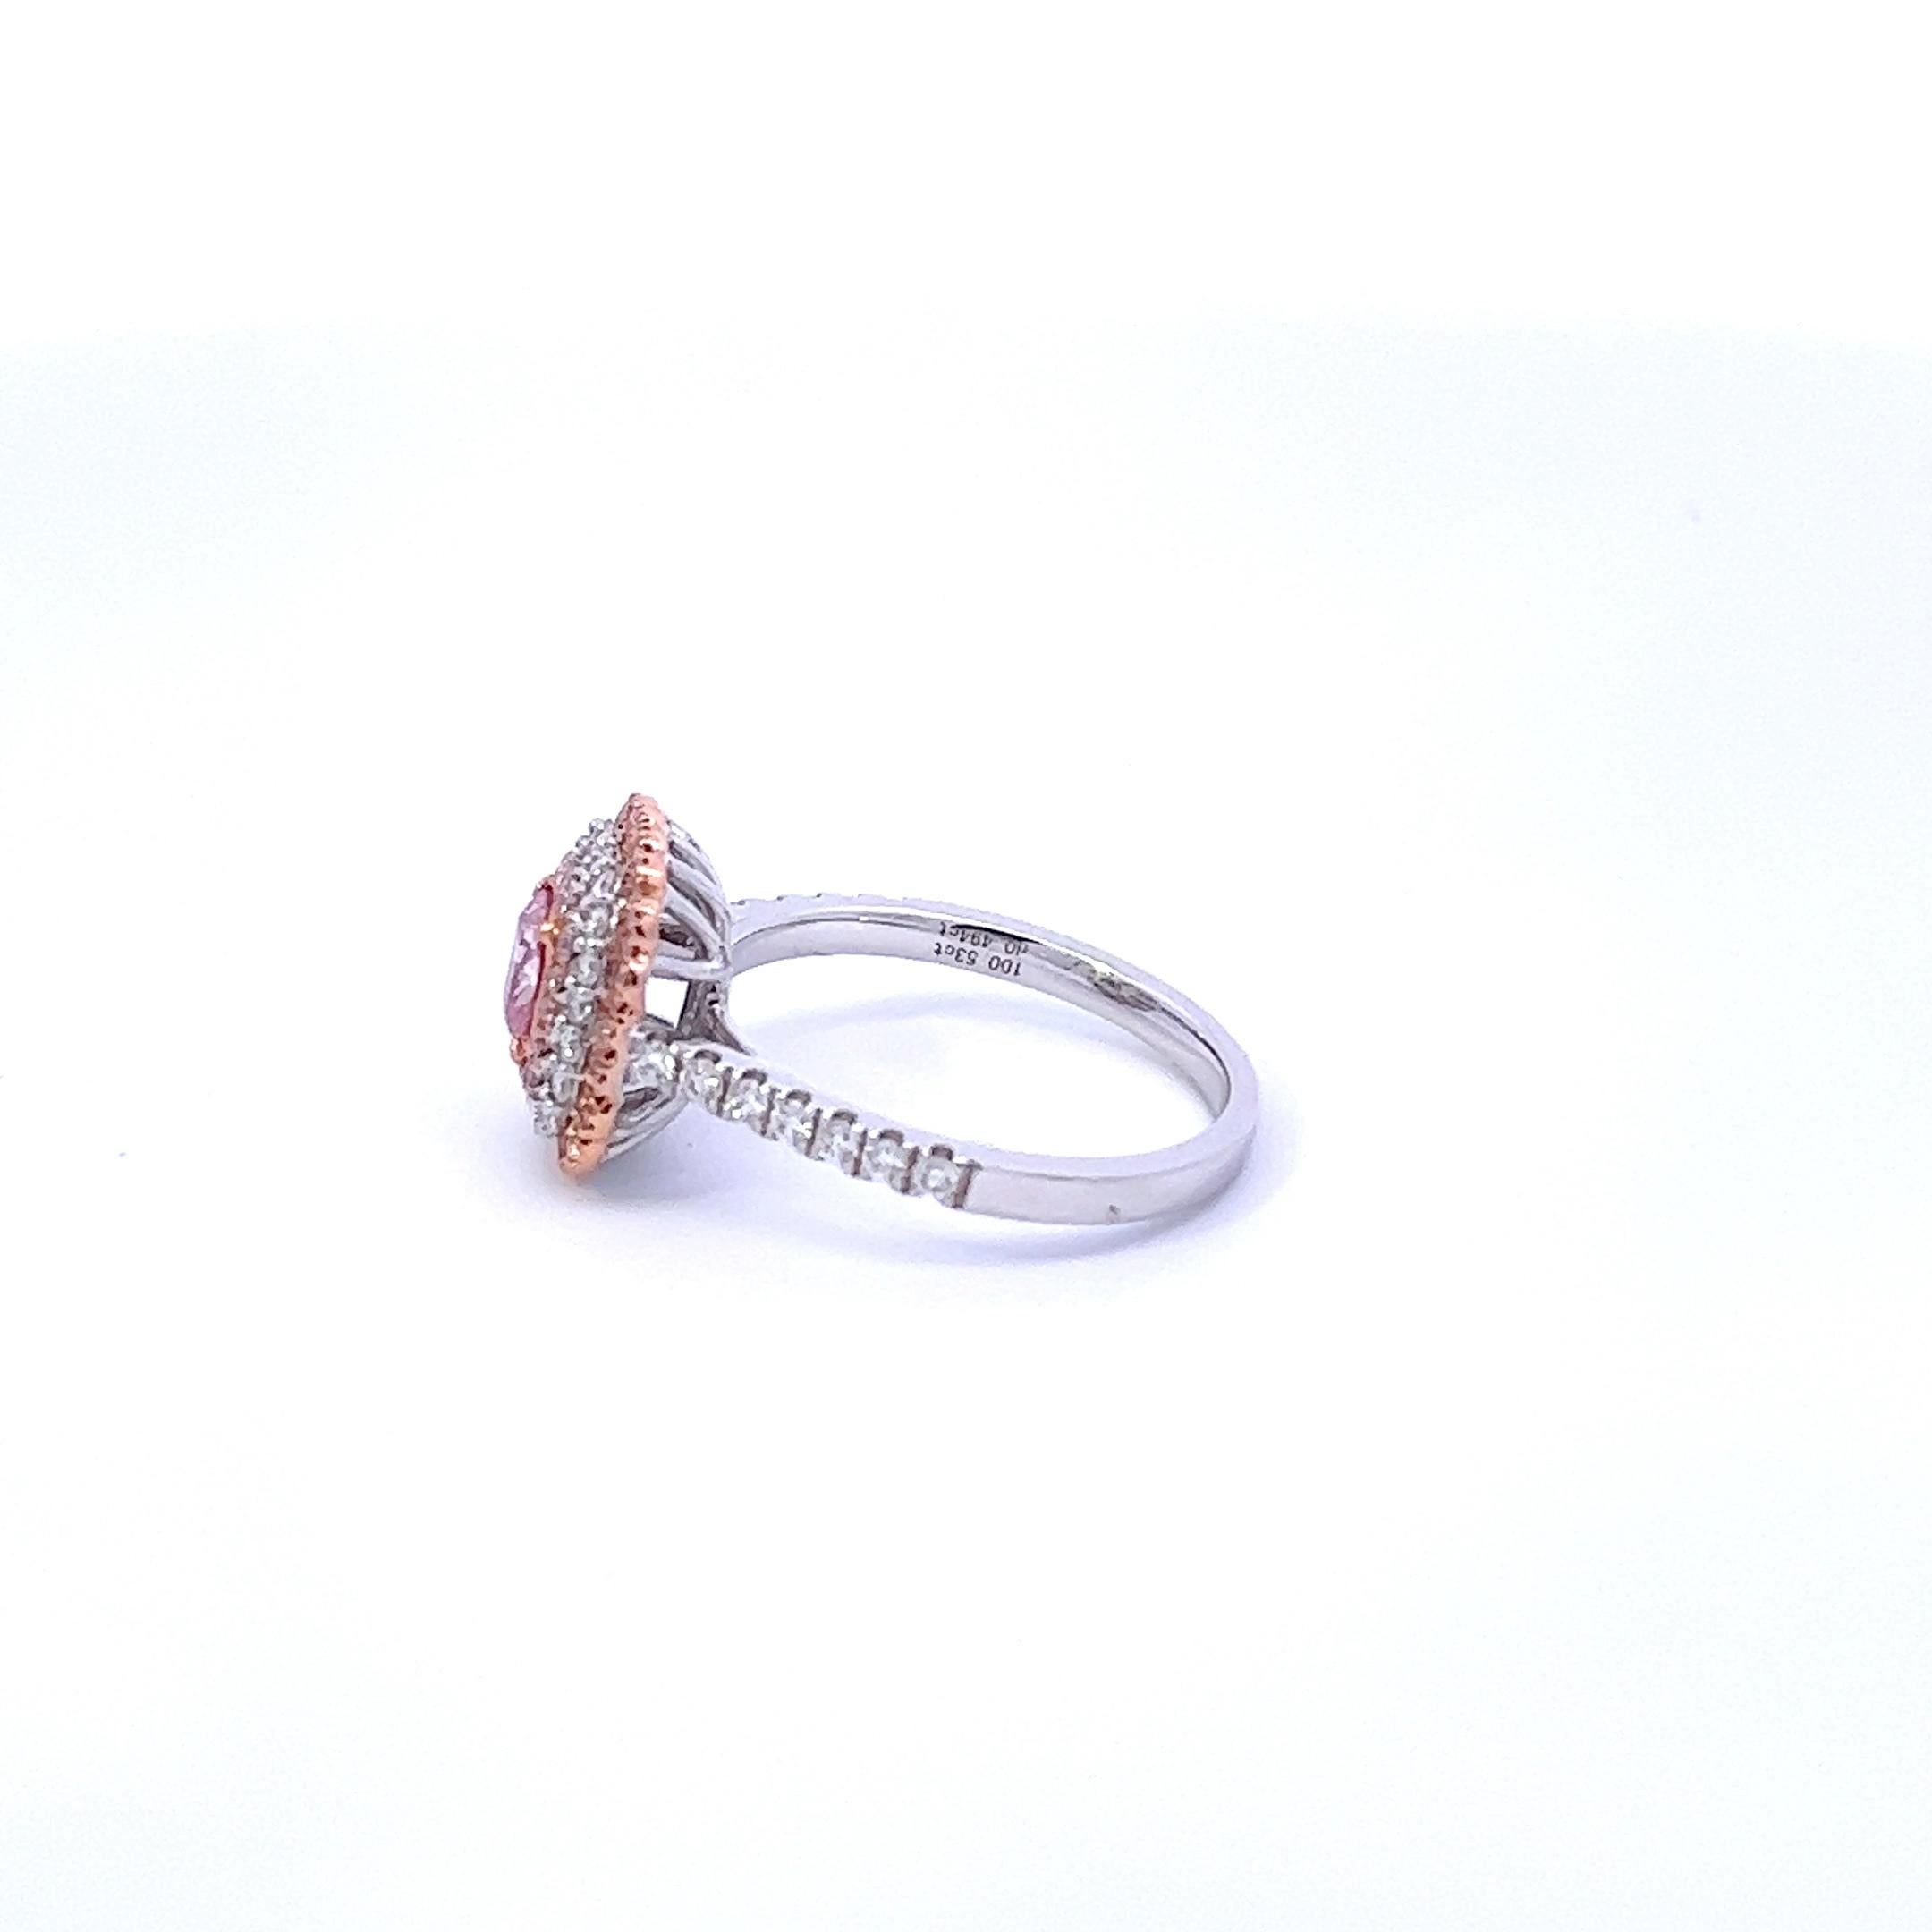 Cushion Cut GIA Certified 0.53 Carat Pink Diamond Ring For Sale